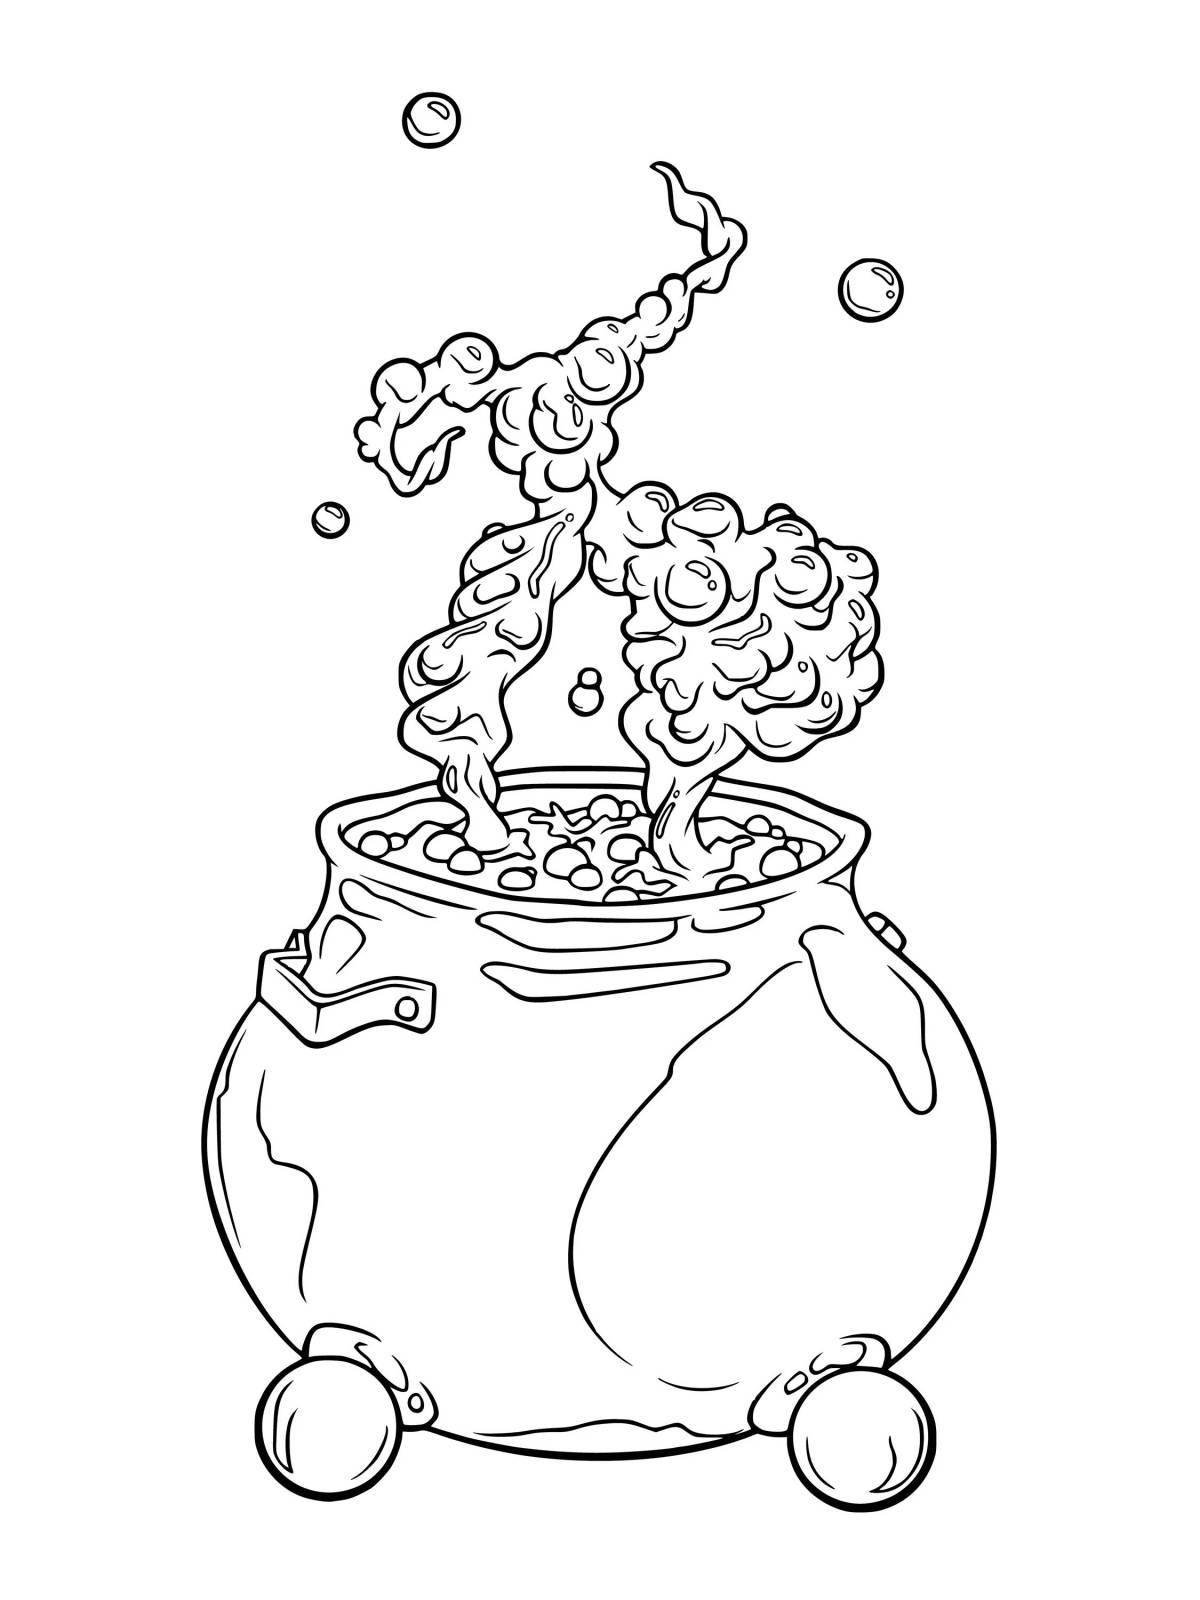 Coloring funny cauldron